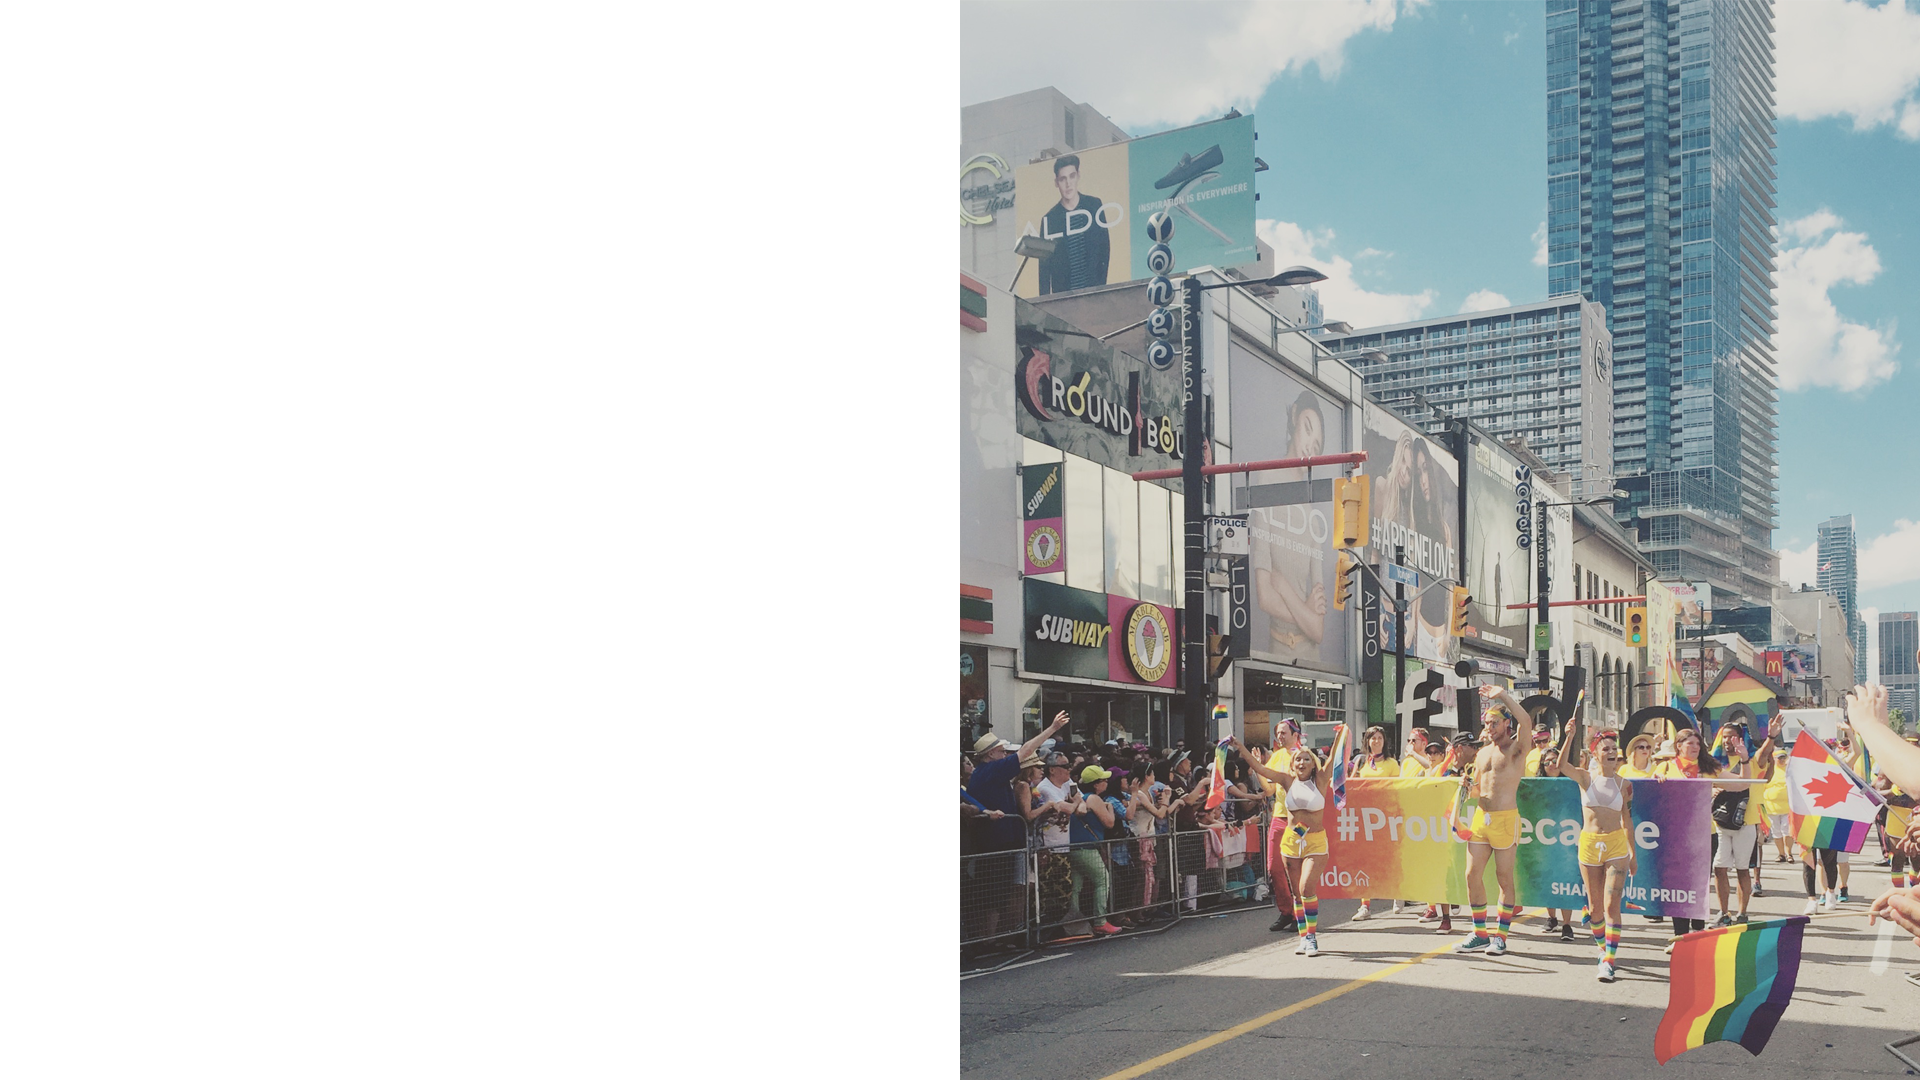 ovrsee-Toronto_Pride_Prade-image